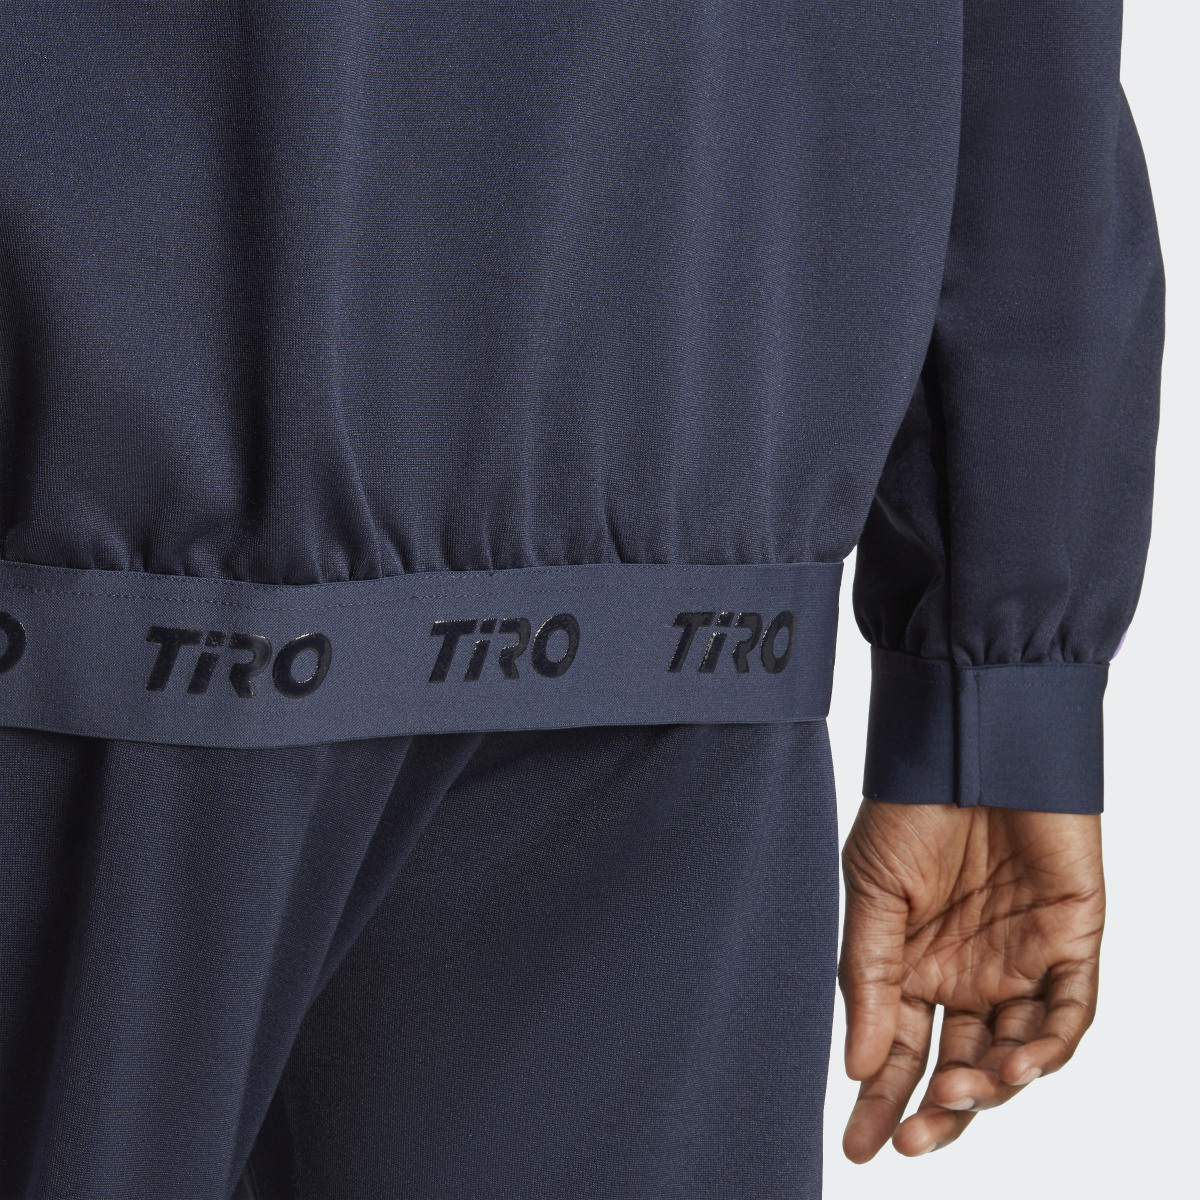 Adidas Tiro Suit-Up Advanced Track Top. 9